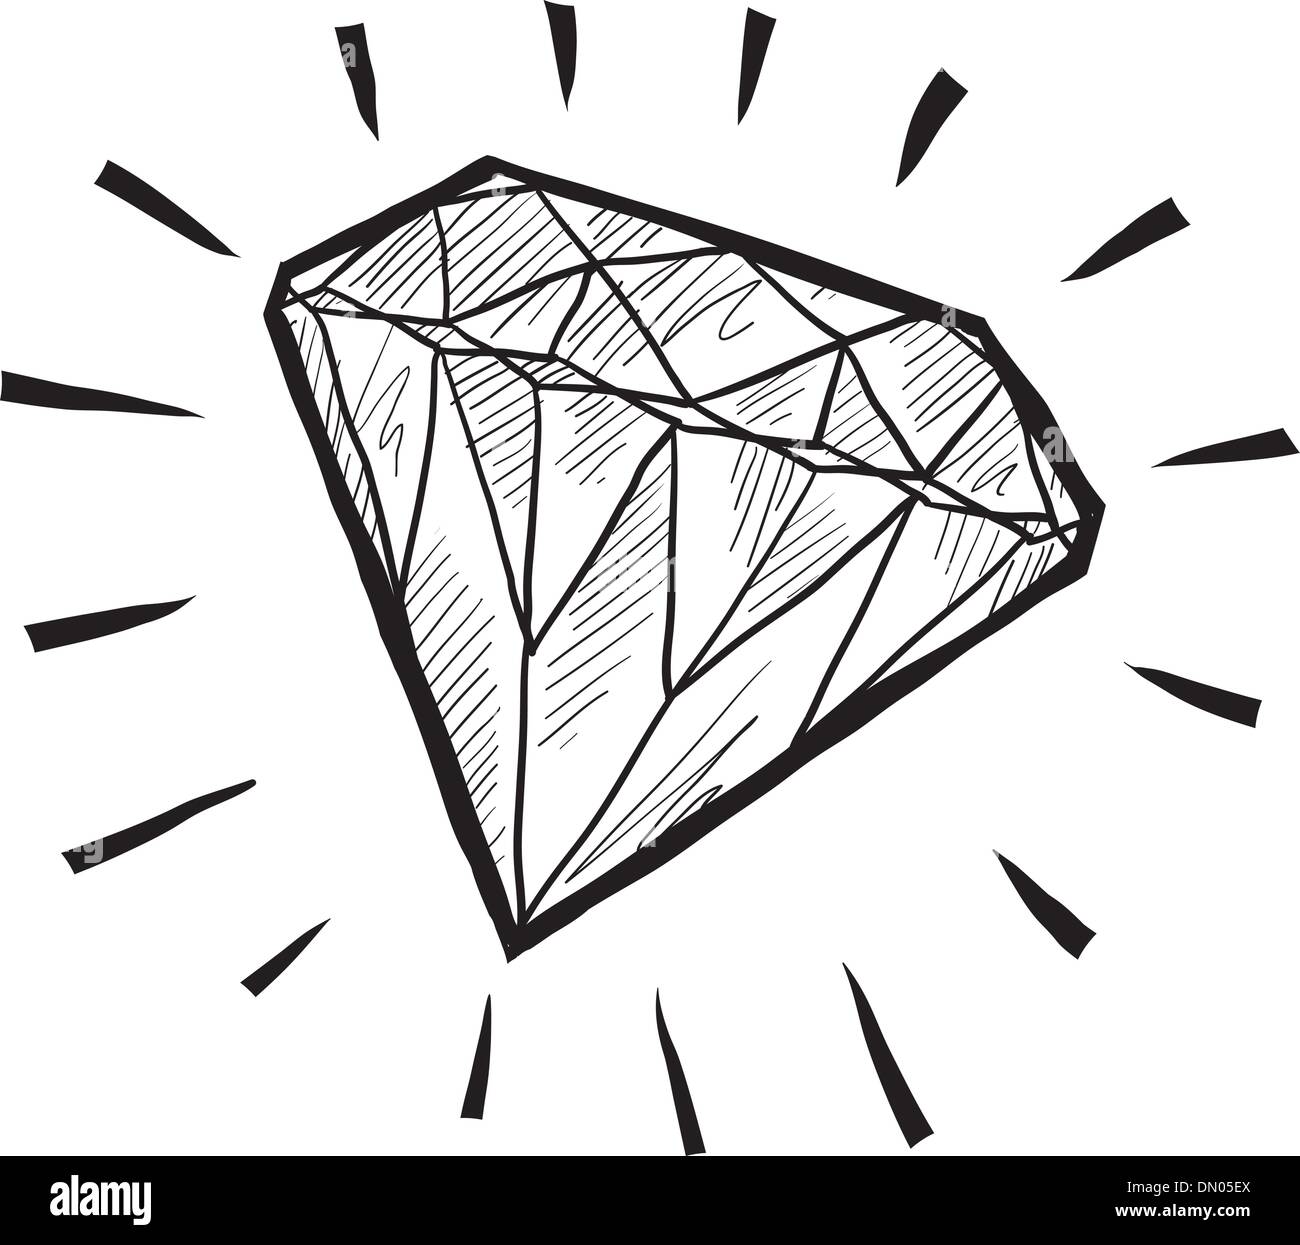 Dibujo de diamante Imagen Vector de stock - Alamy